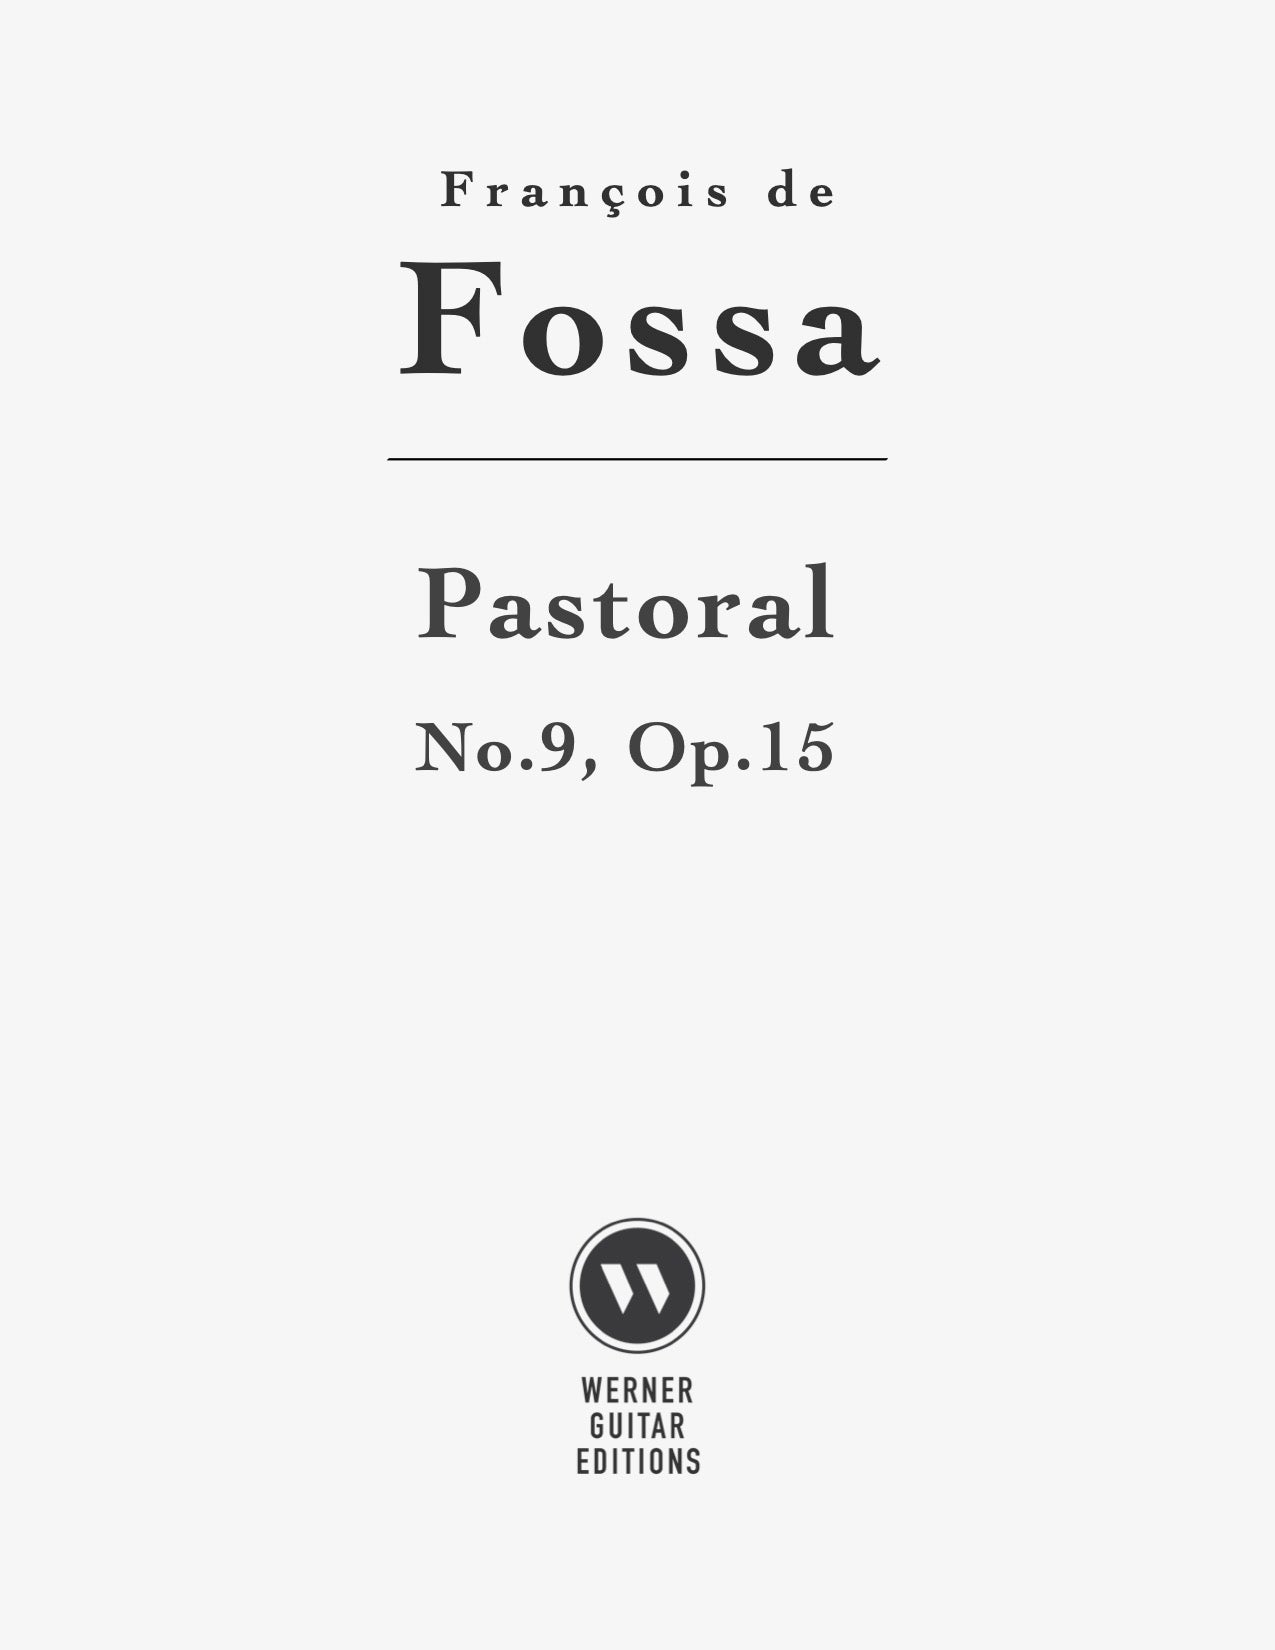 Pastoral, No.9 from Douze Divertissemens, Op.15 by François de Fossa - PDF Sheet Music for Classical Guitar